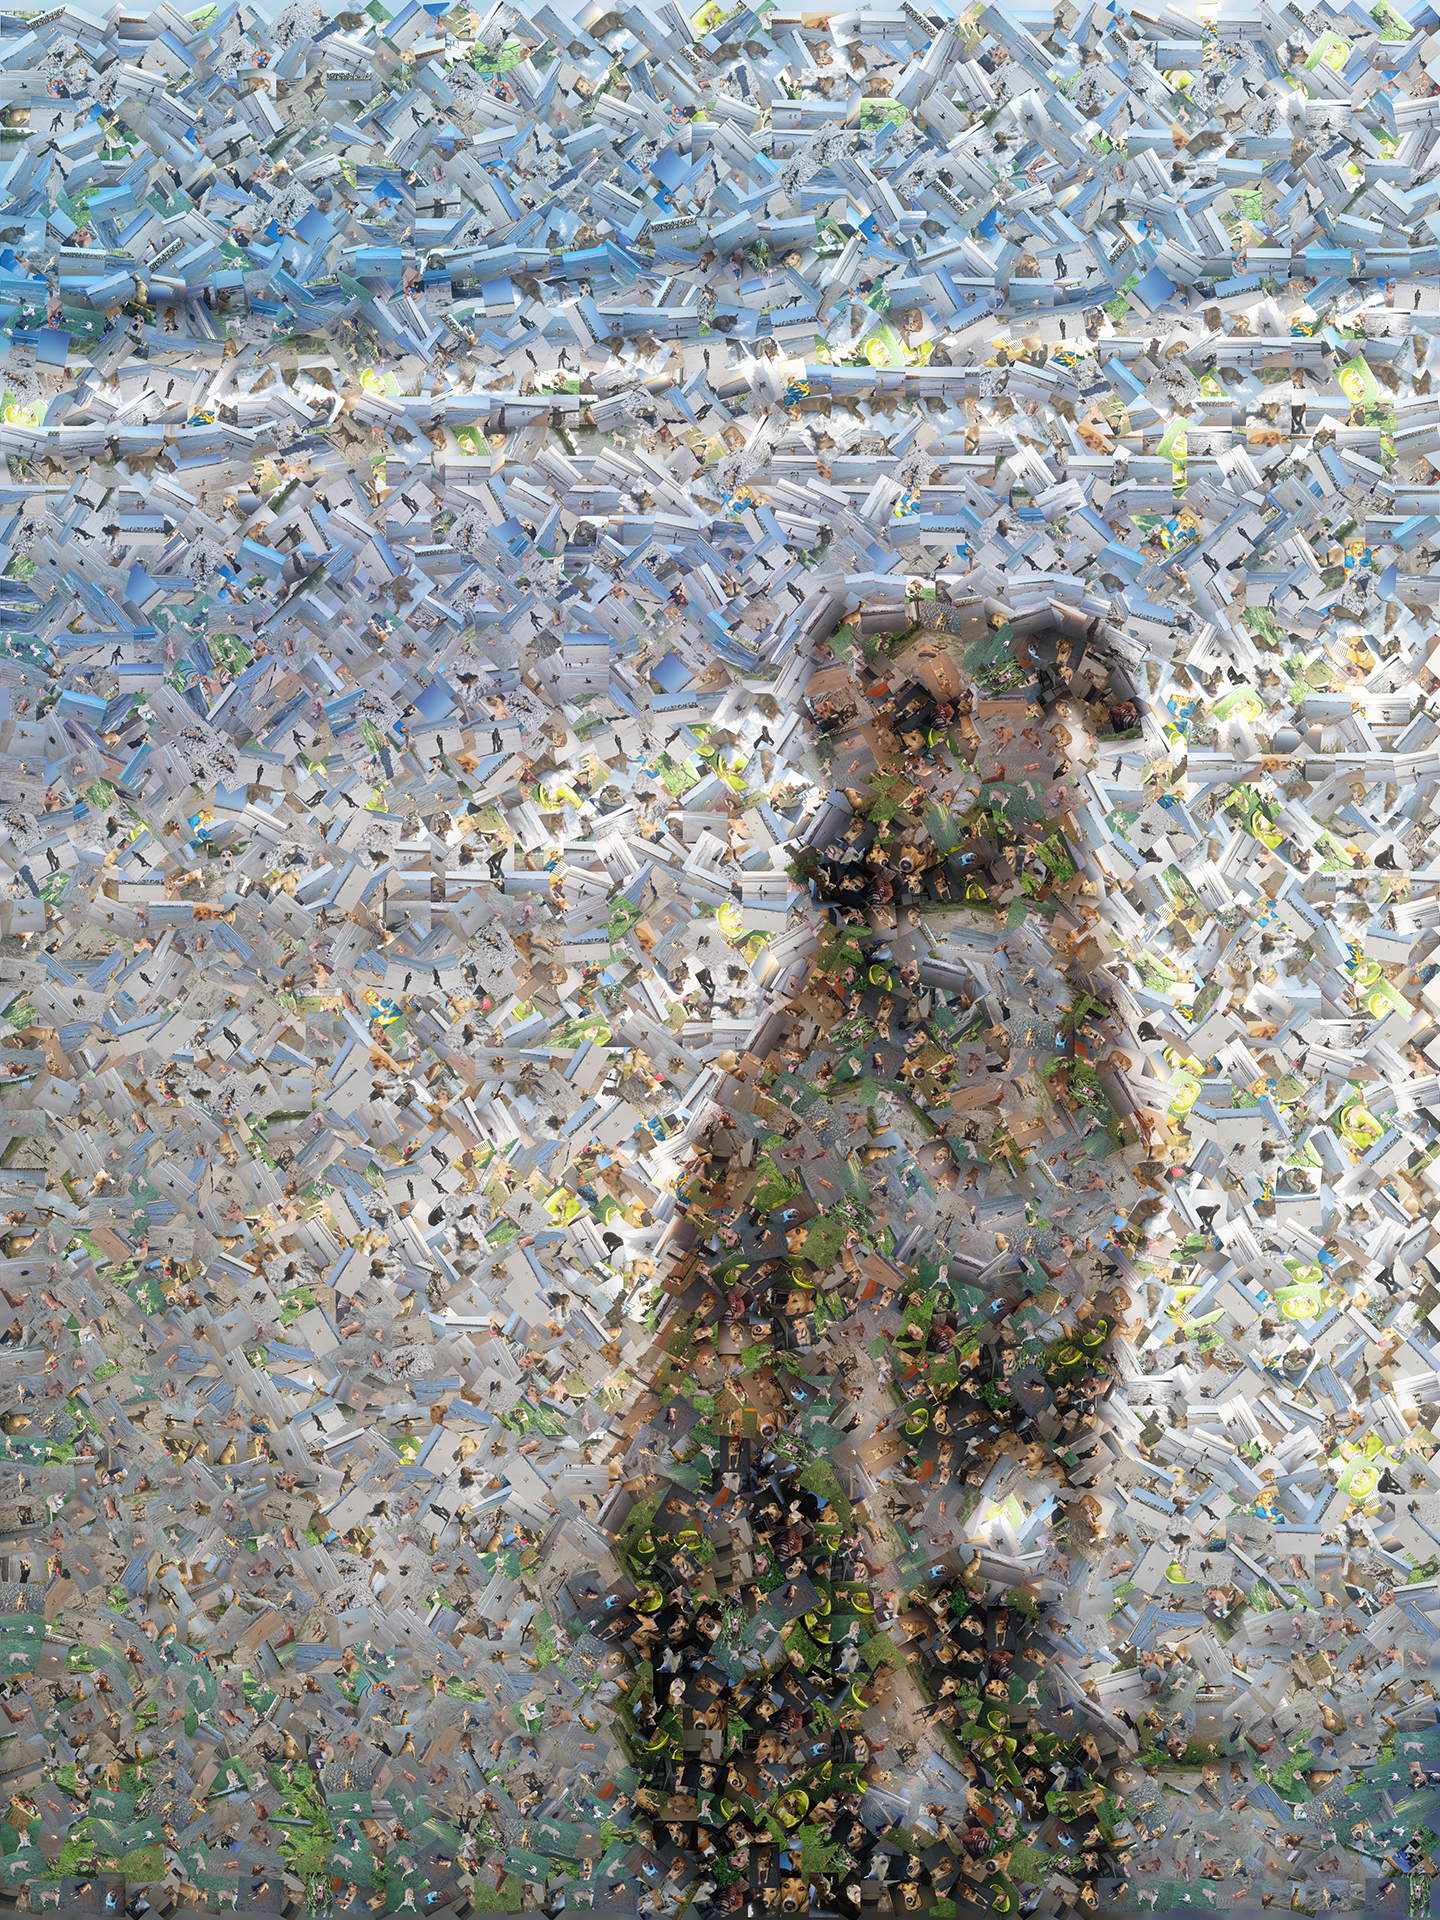 photo mosaic a serene dog sitting on the beach, created using 289 photos